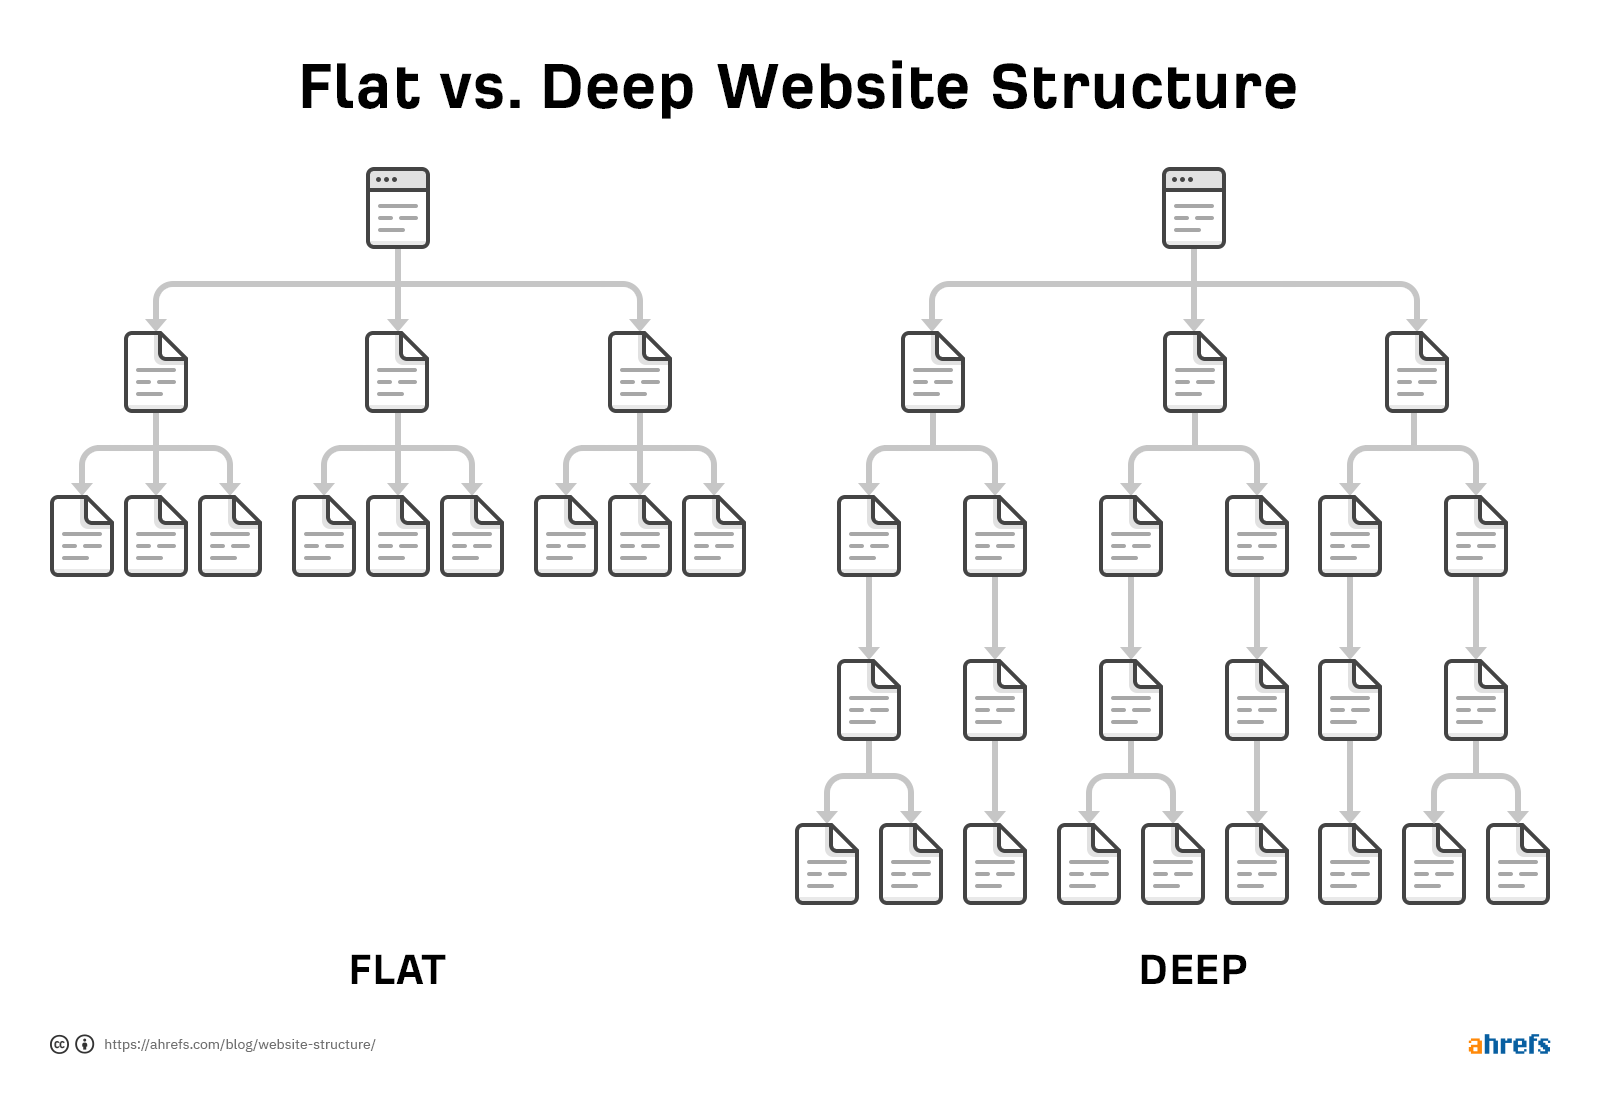 Flat vs. deep website structure, via Ahrefs Blog